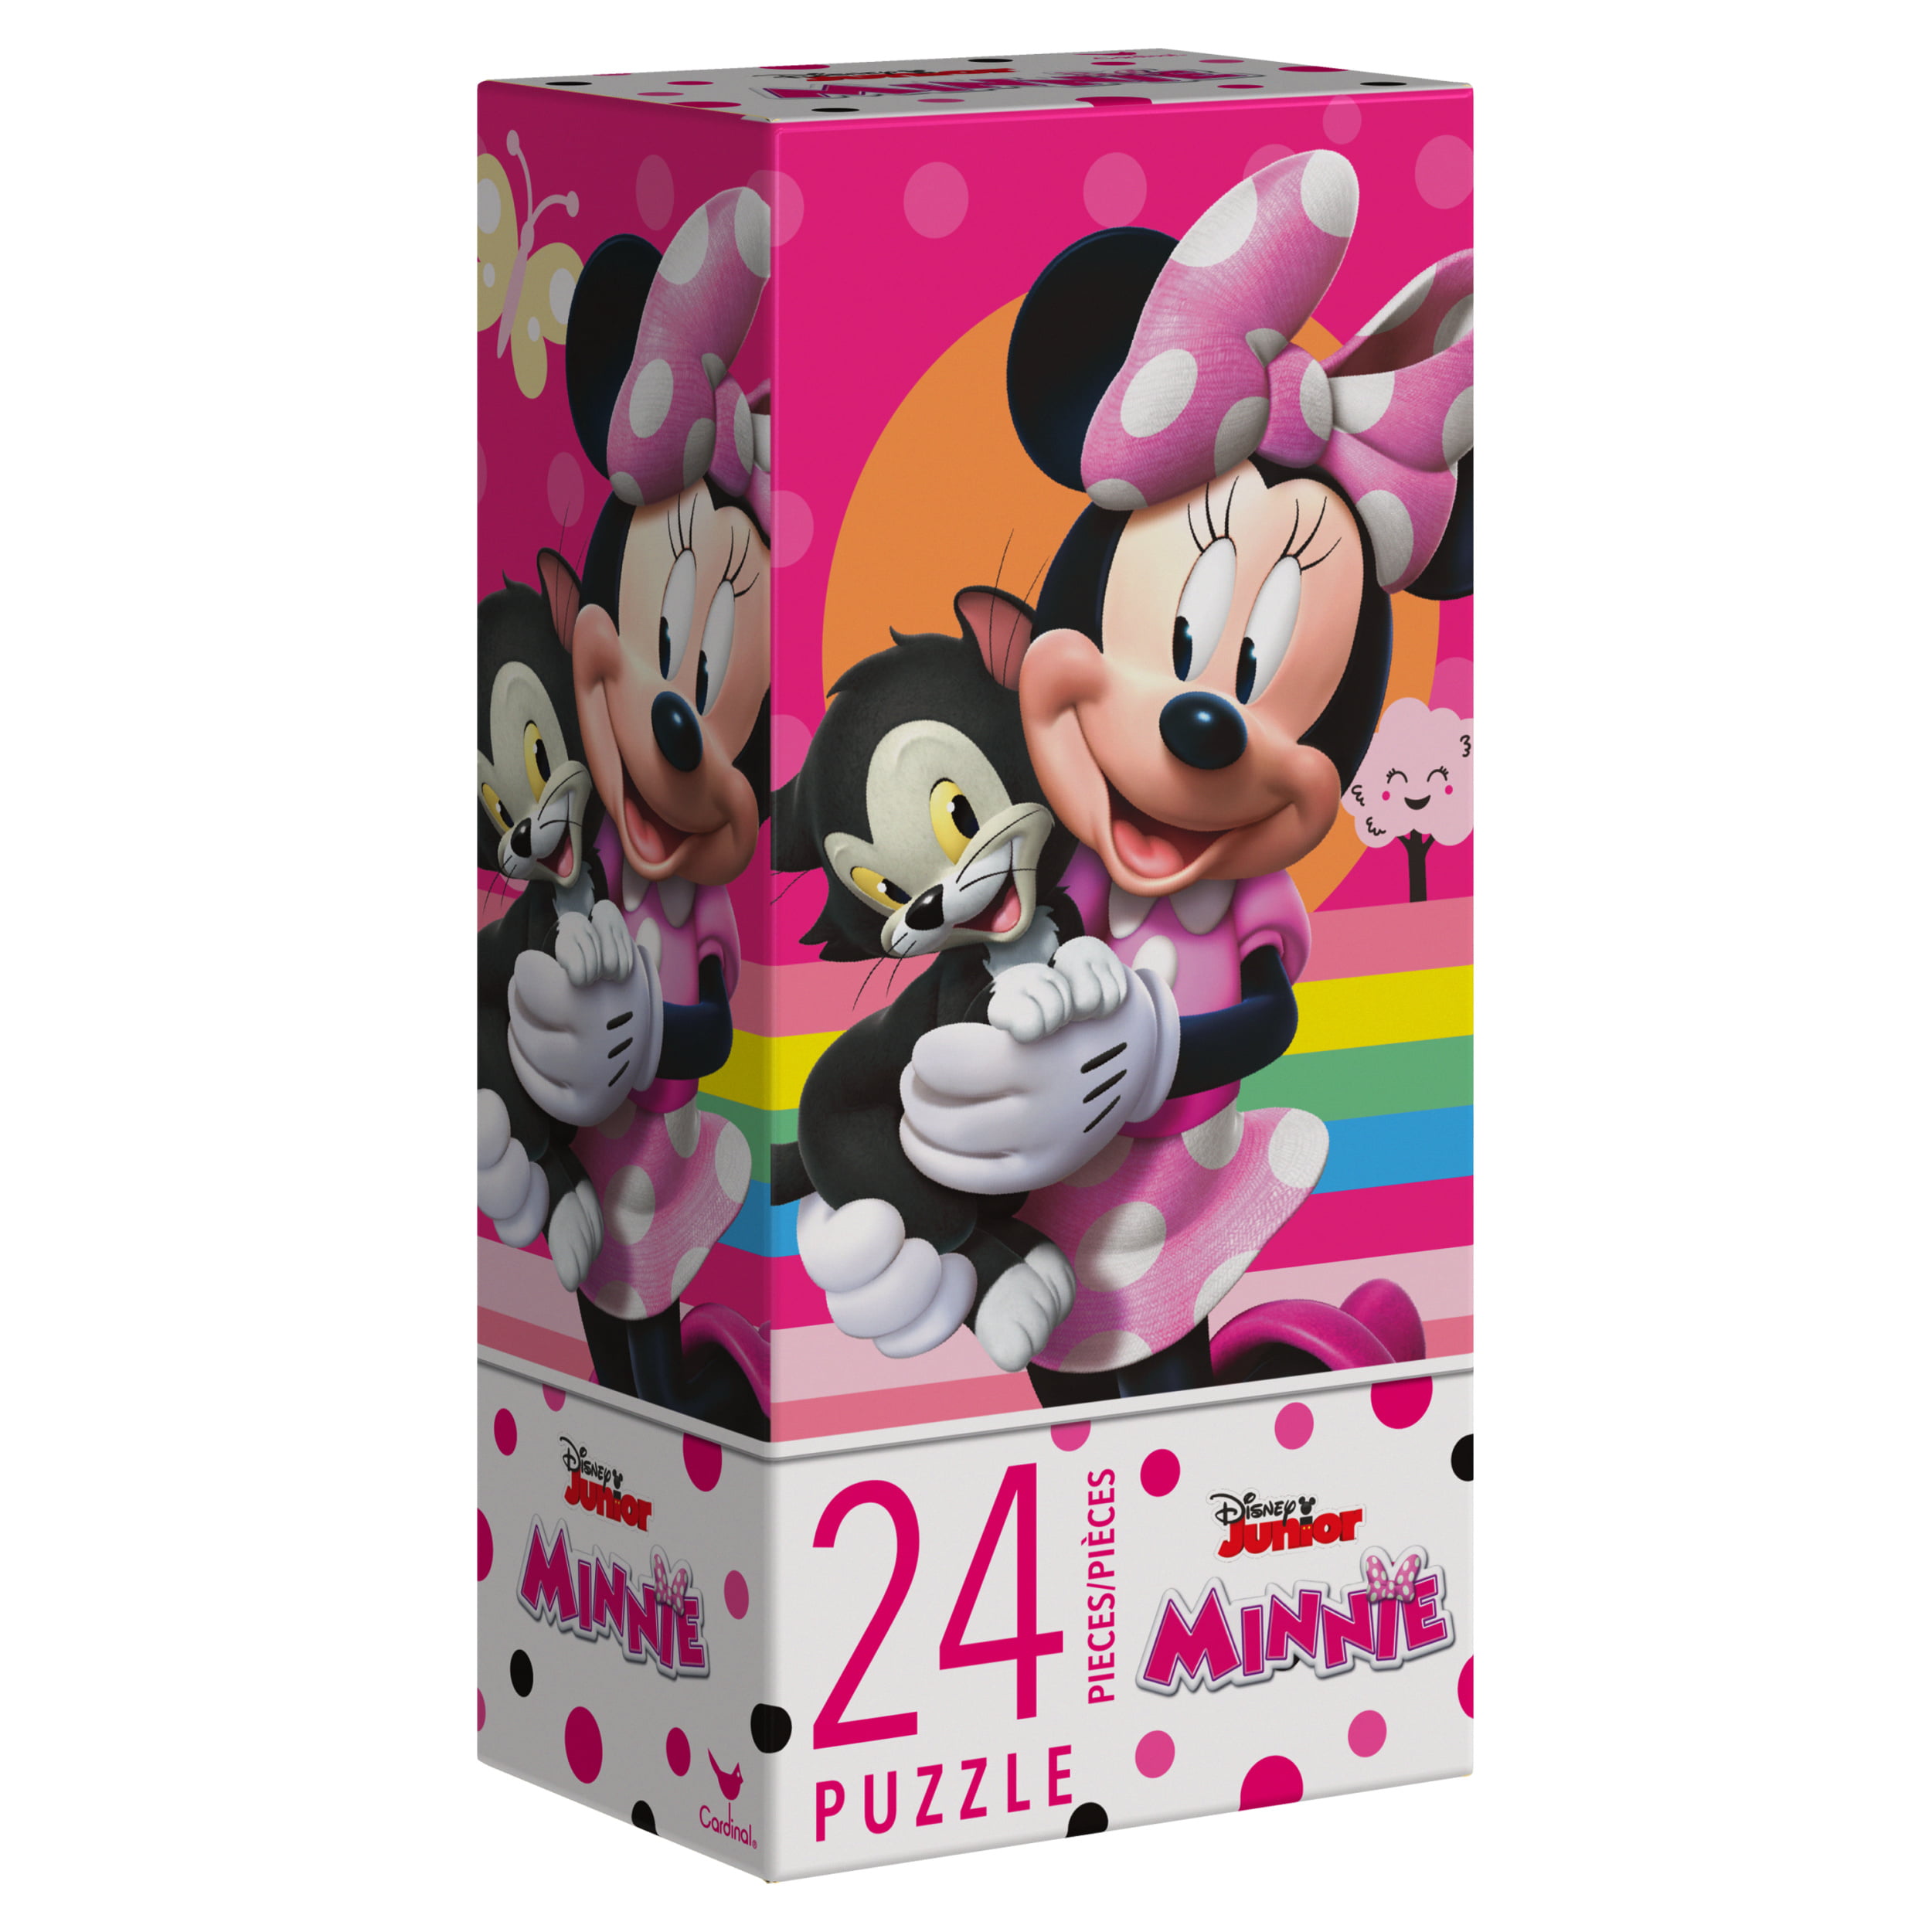 Disney udio Minnie Mouse Jigsaw Puzzle Bundle - 4 Pack Minnie Mouse Puzzles  24 Piece with Disney Junior Stickers | Minnie Party Favors (Minnie Mouse